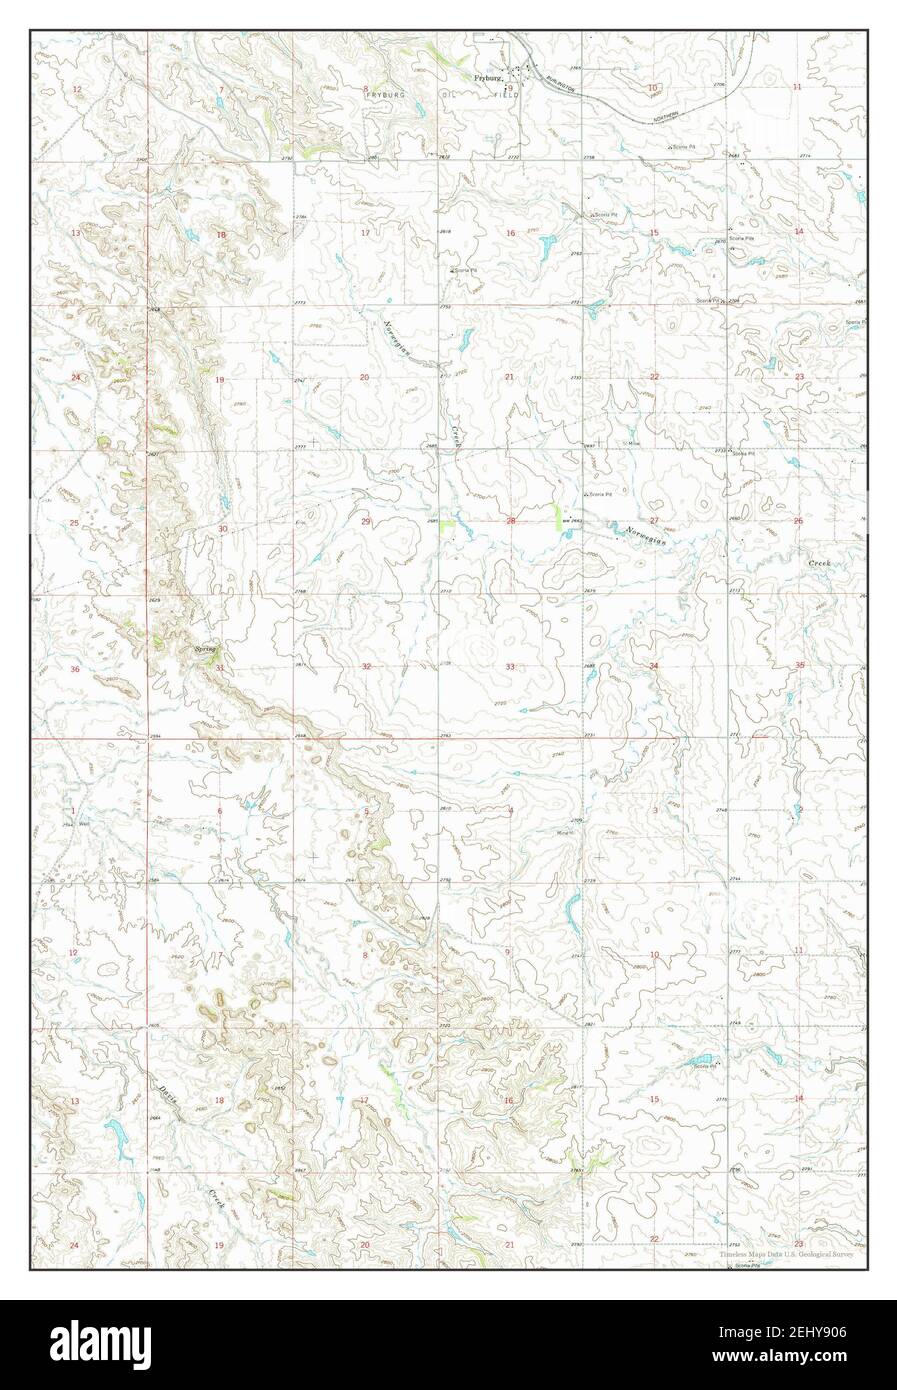 Fryburg, North Dakota, map 1962, 1:24000, United States of America by Timeless Maps, data U.S. Geological Survey Stock Photo